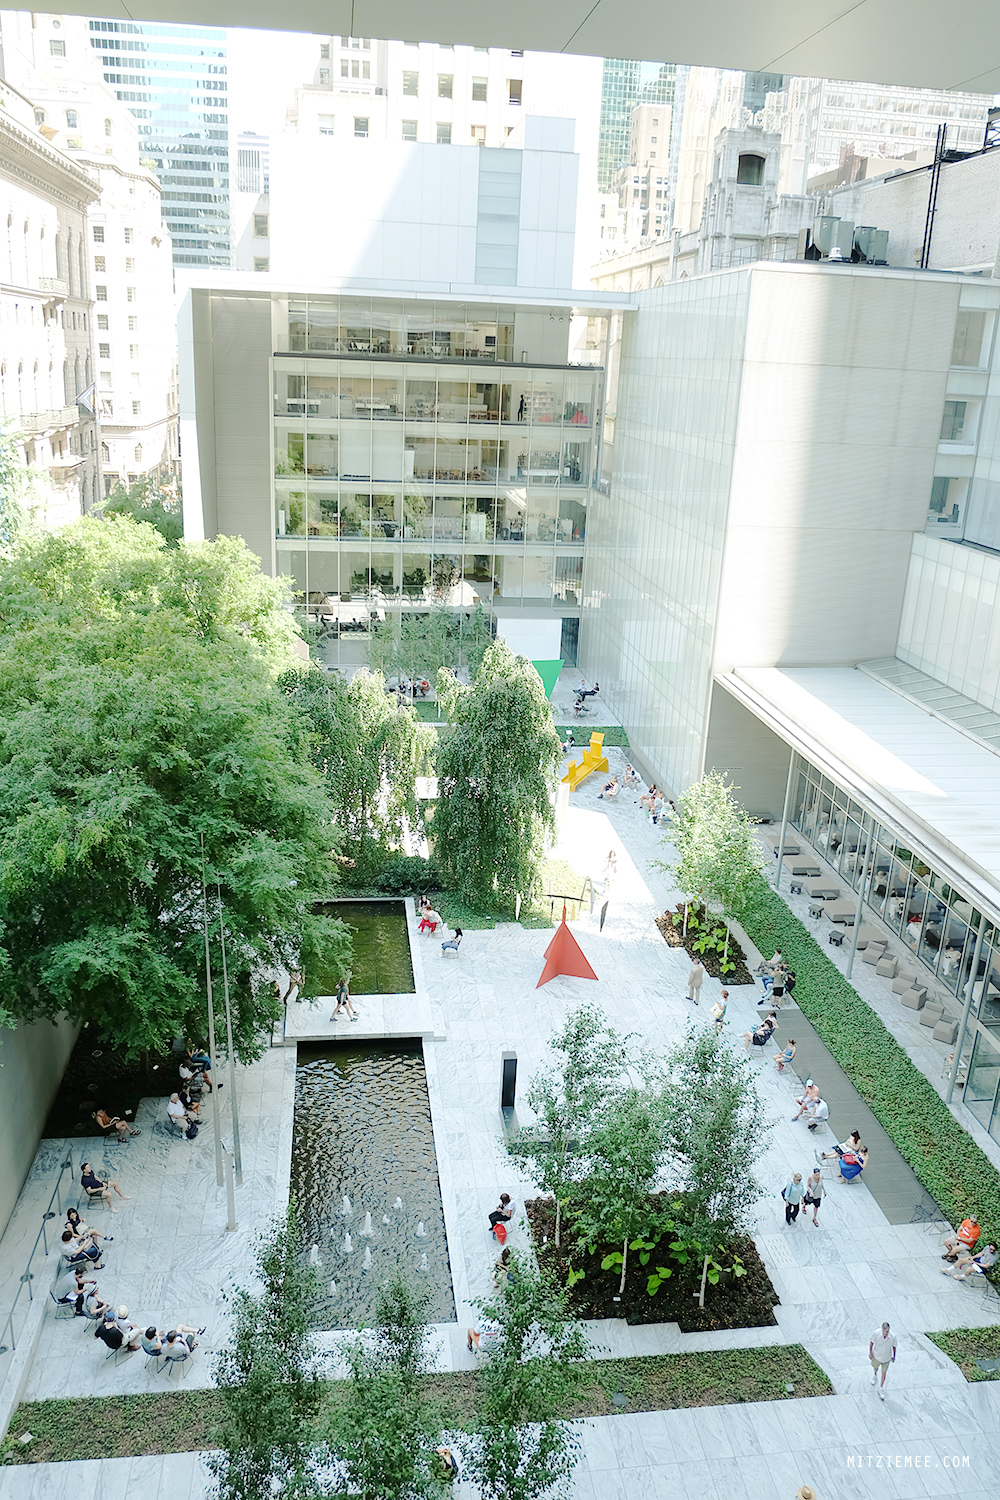 The Sculpture Garden at MoMA, New York